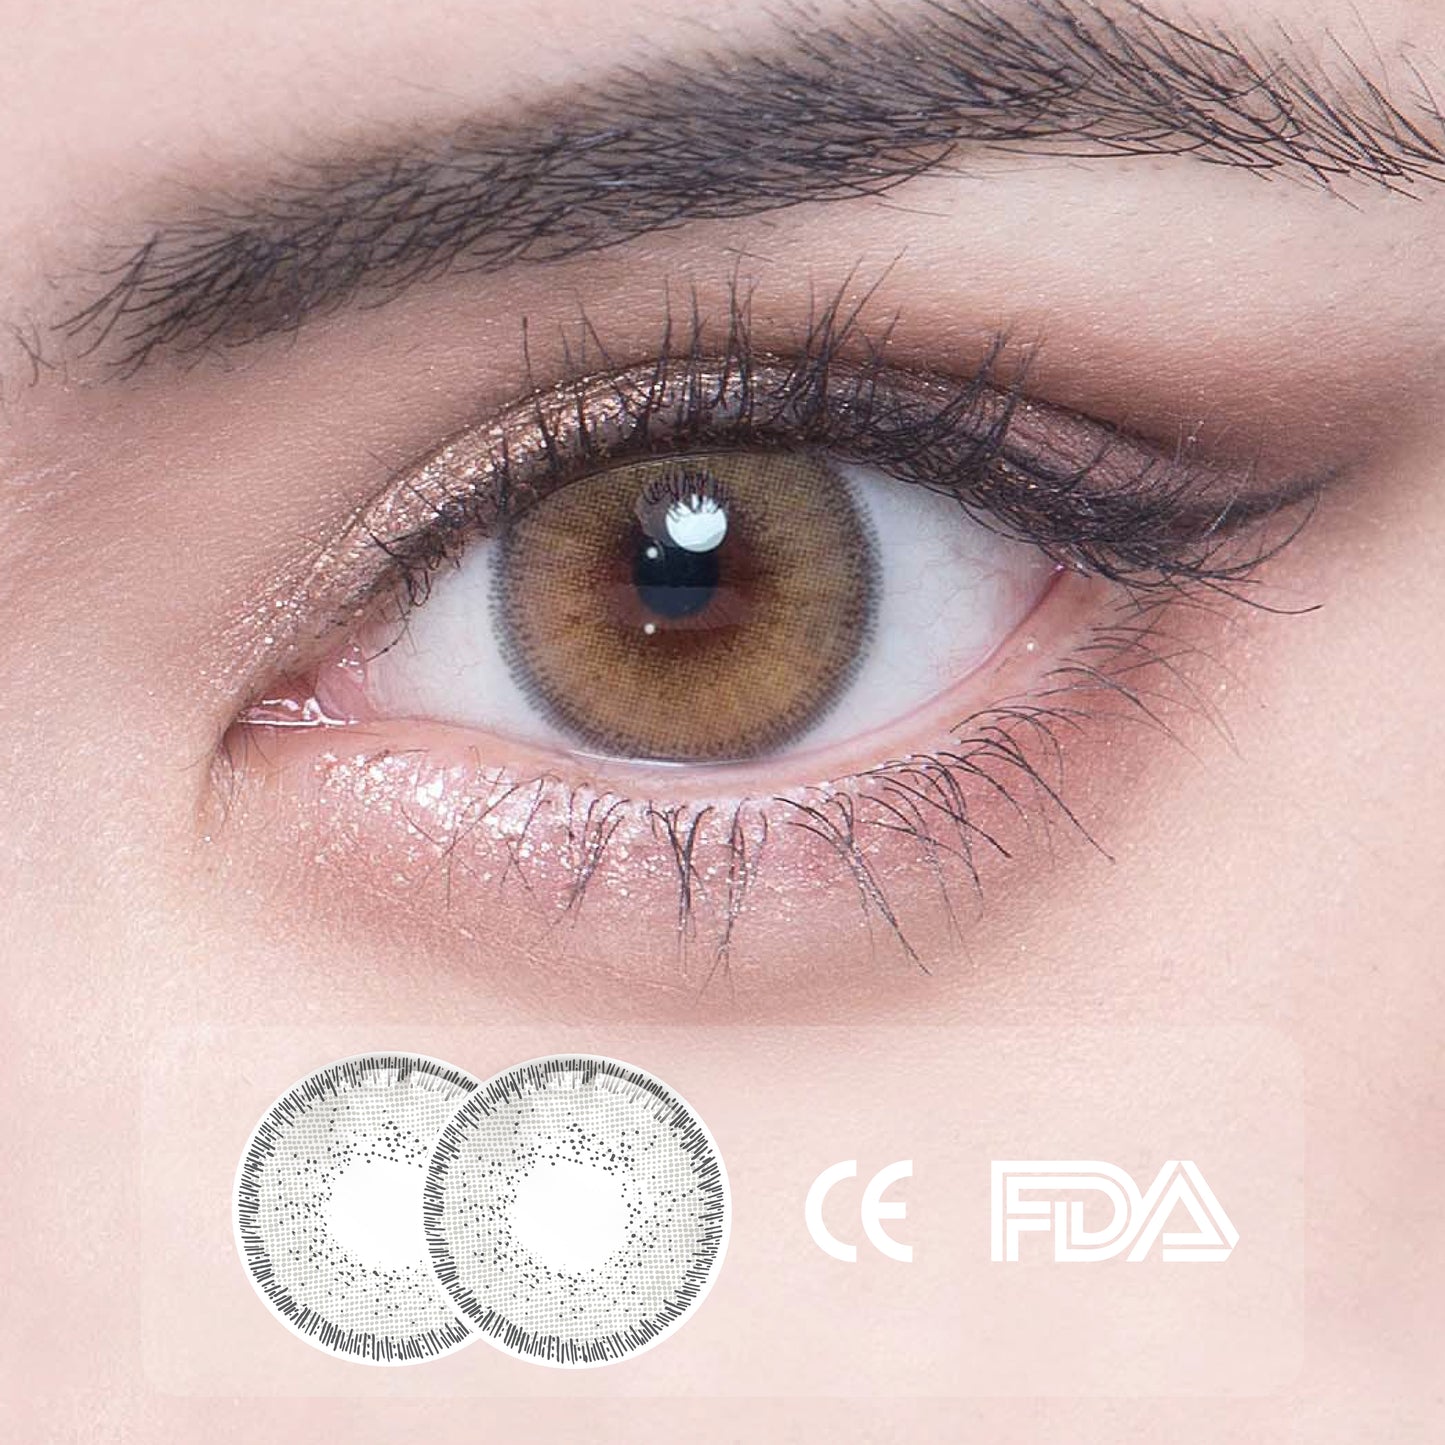 1Pcs FDA Certificate Eyes Colorful Contact Lenses - Wonderland grey